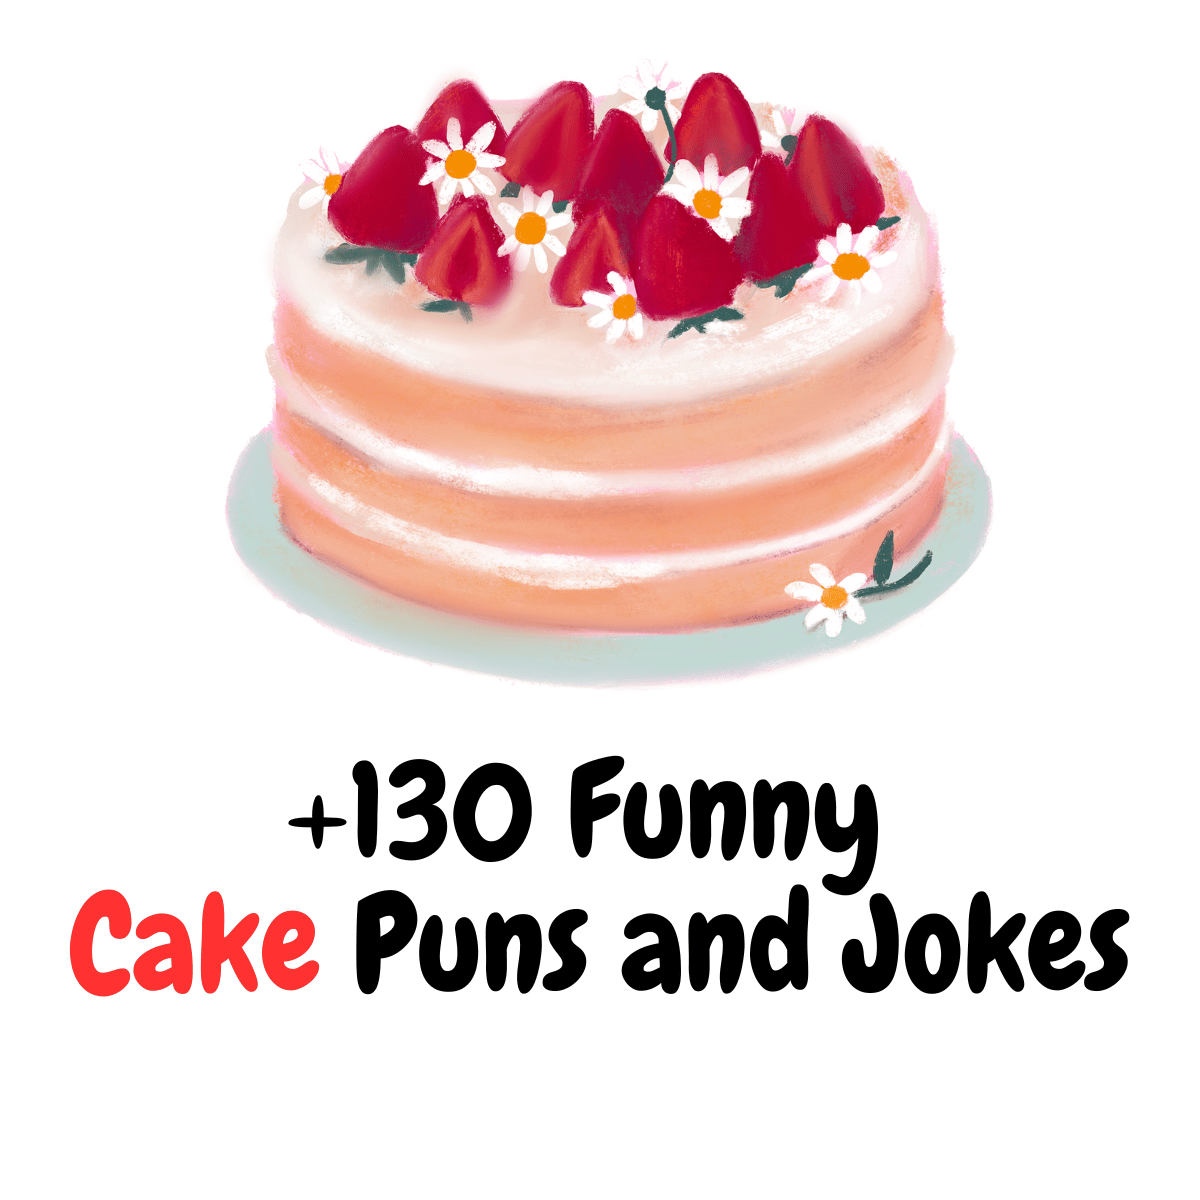 +130 Funny Cake Puns and Jokes